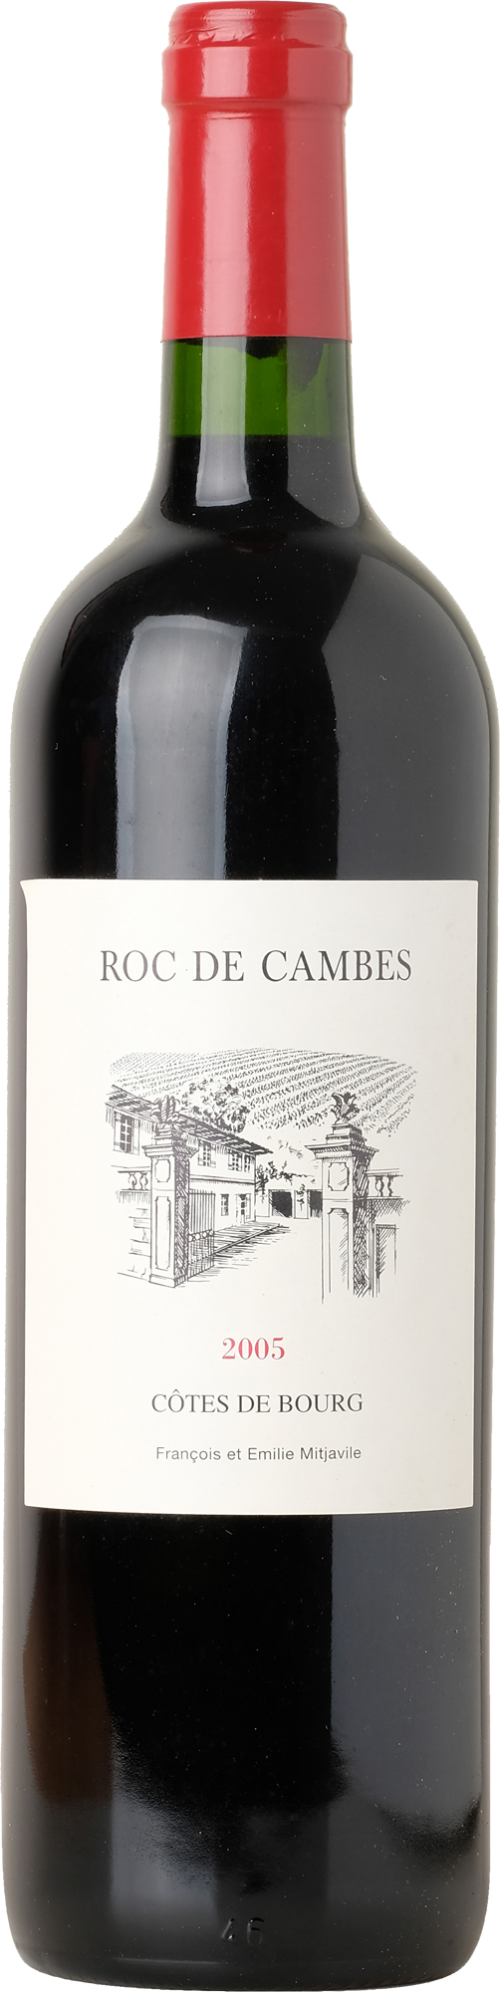 Roc de Cambes, Côtes de Bourg 2005 0,75 l